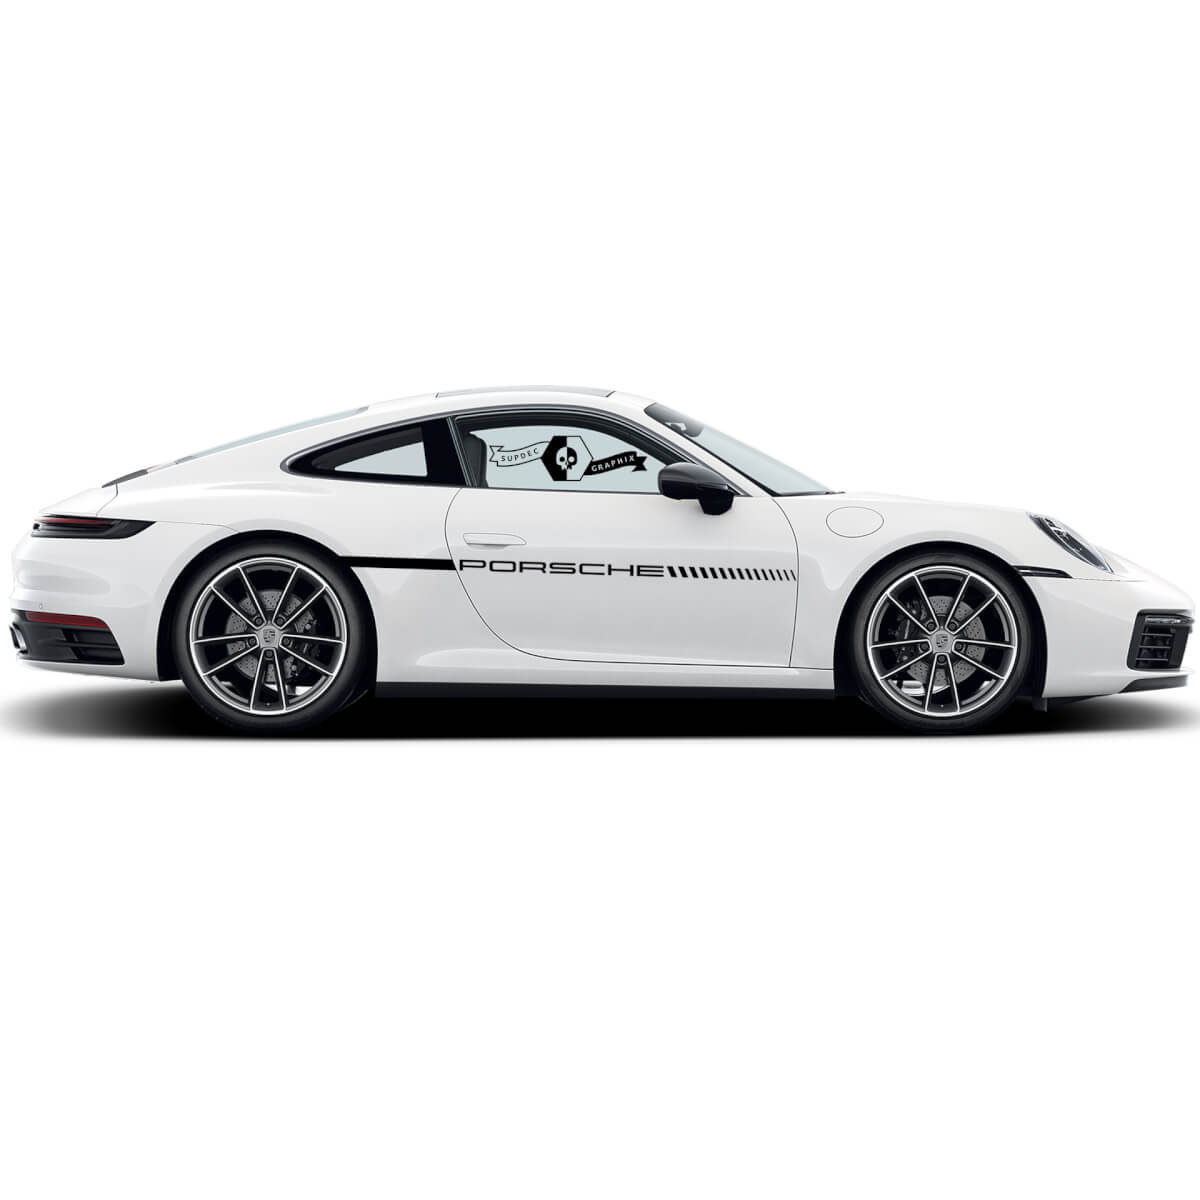 Porsche 911 Carrera Classic Side Stripes Upstüren Kit Aufkleber Aufkleber